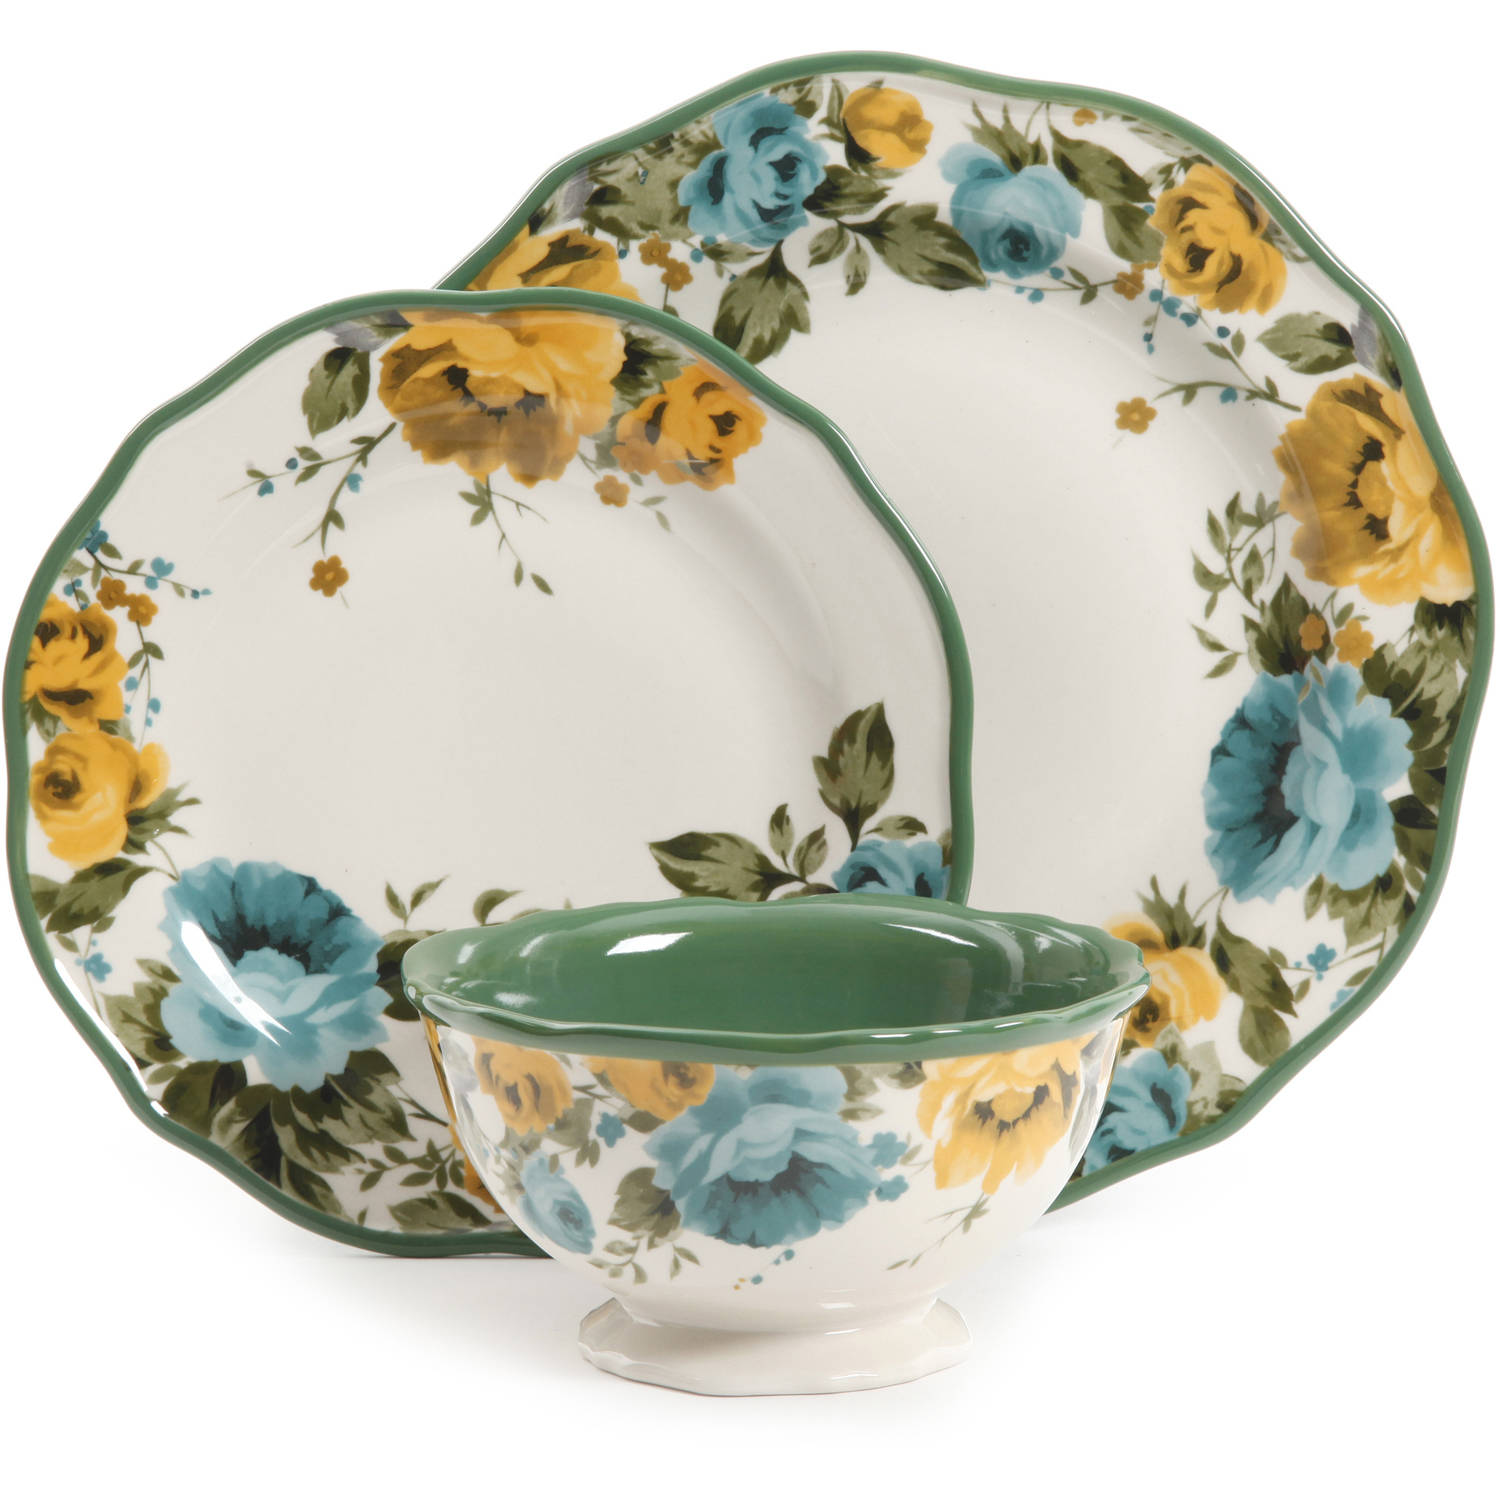 The Pioneer Woman Rose Shadow Green Ceramic 12-Piece Dinnerware Set - image 1 of 5